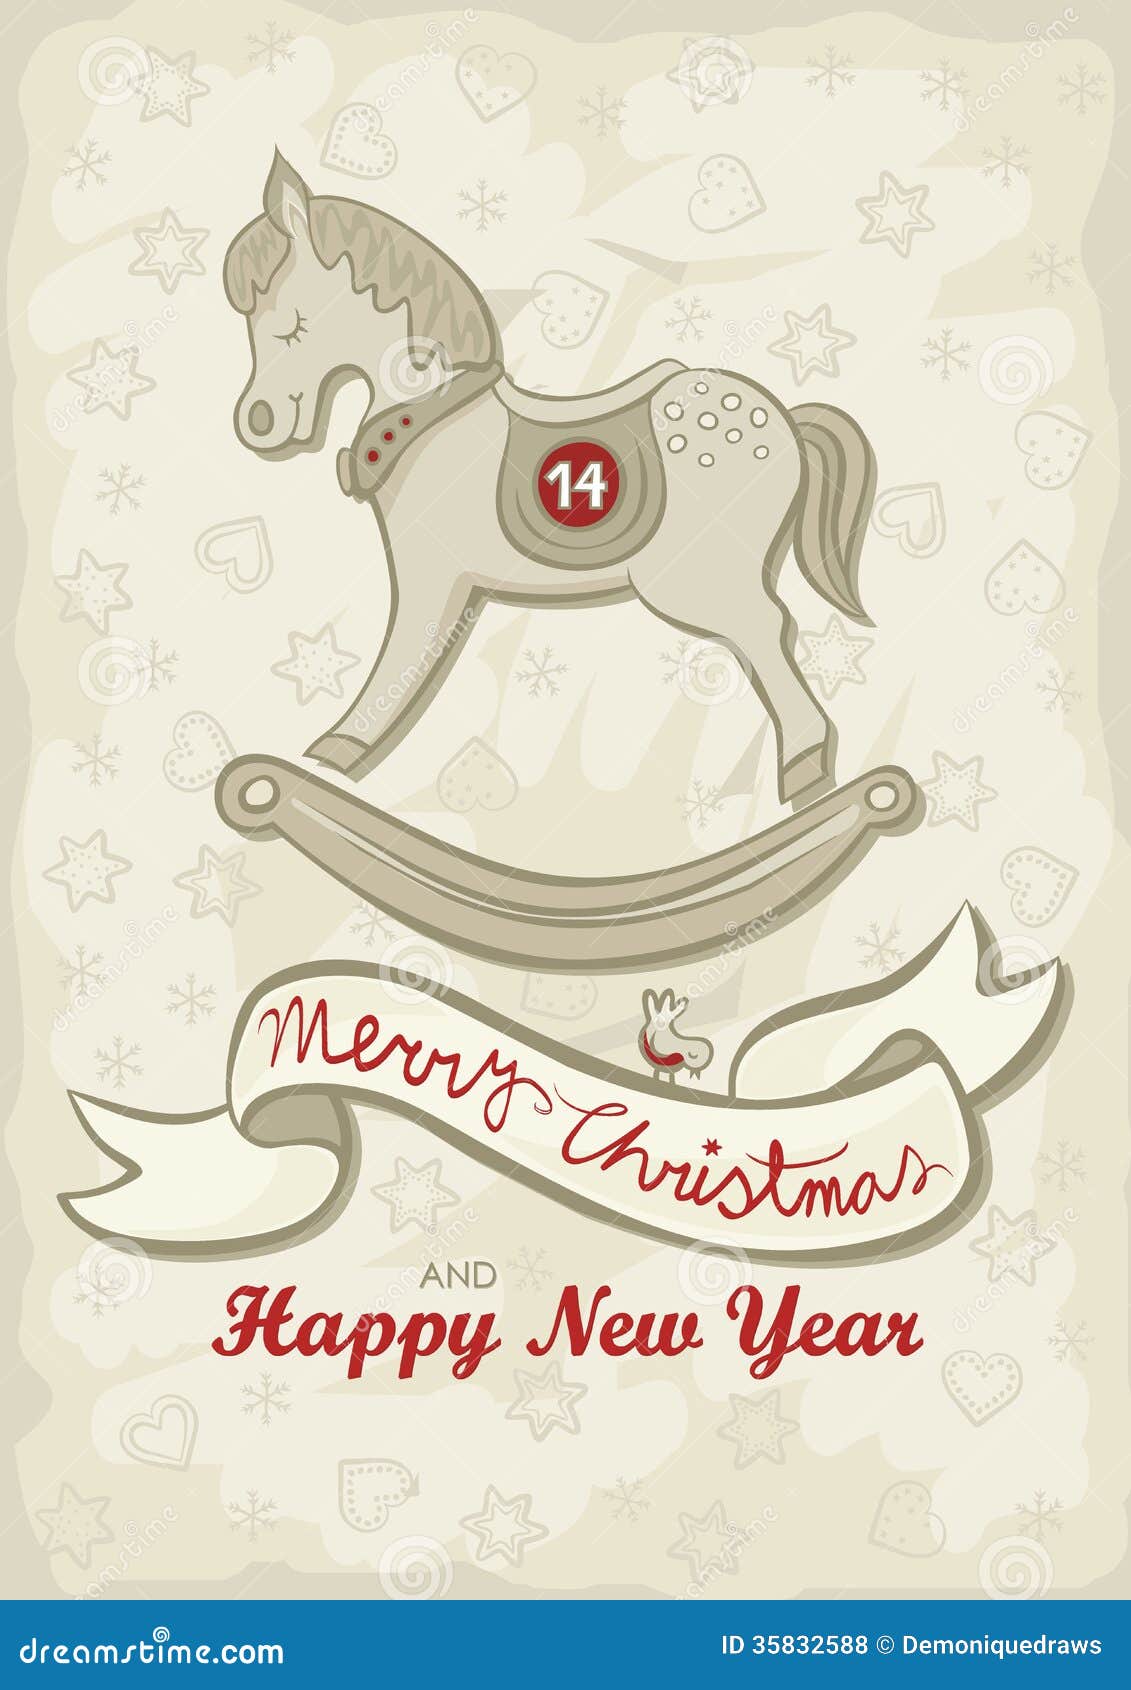 Christmas & New Year Card